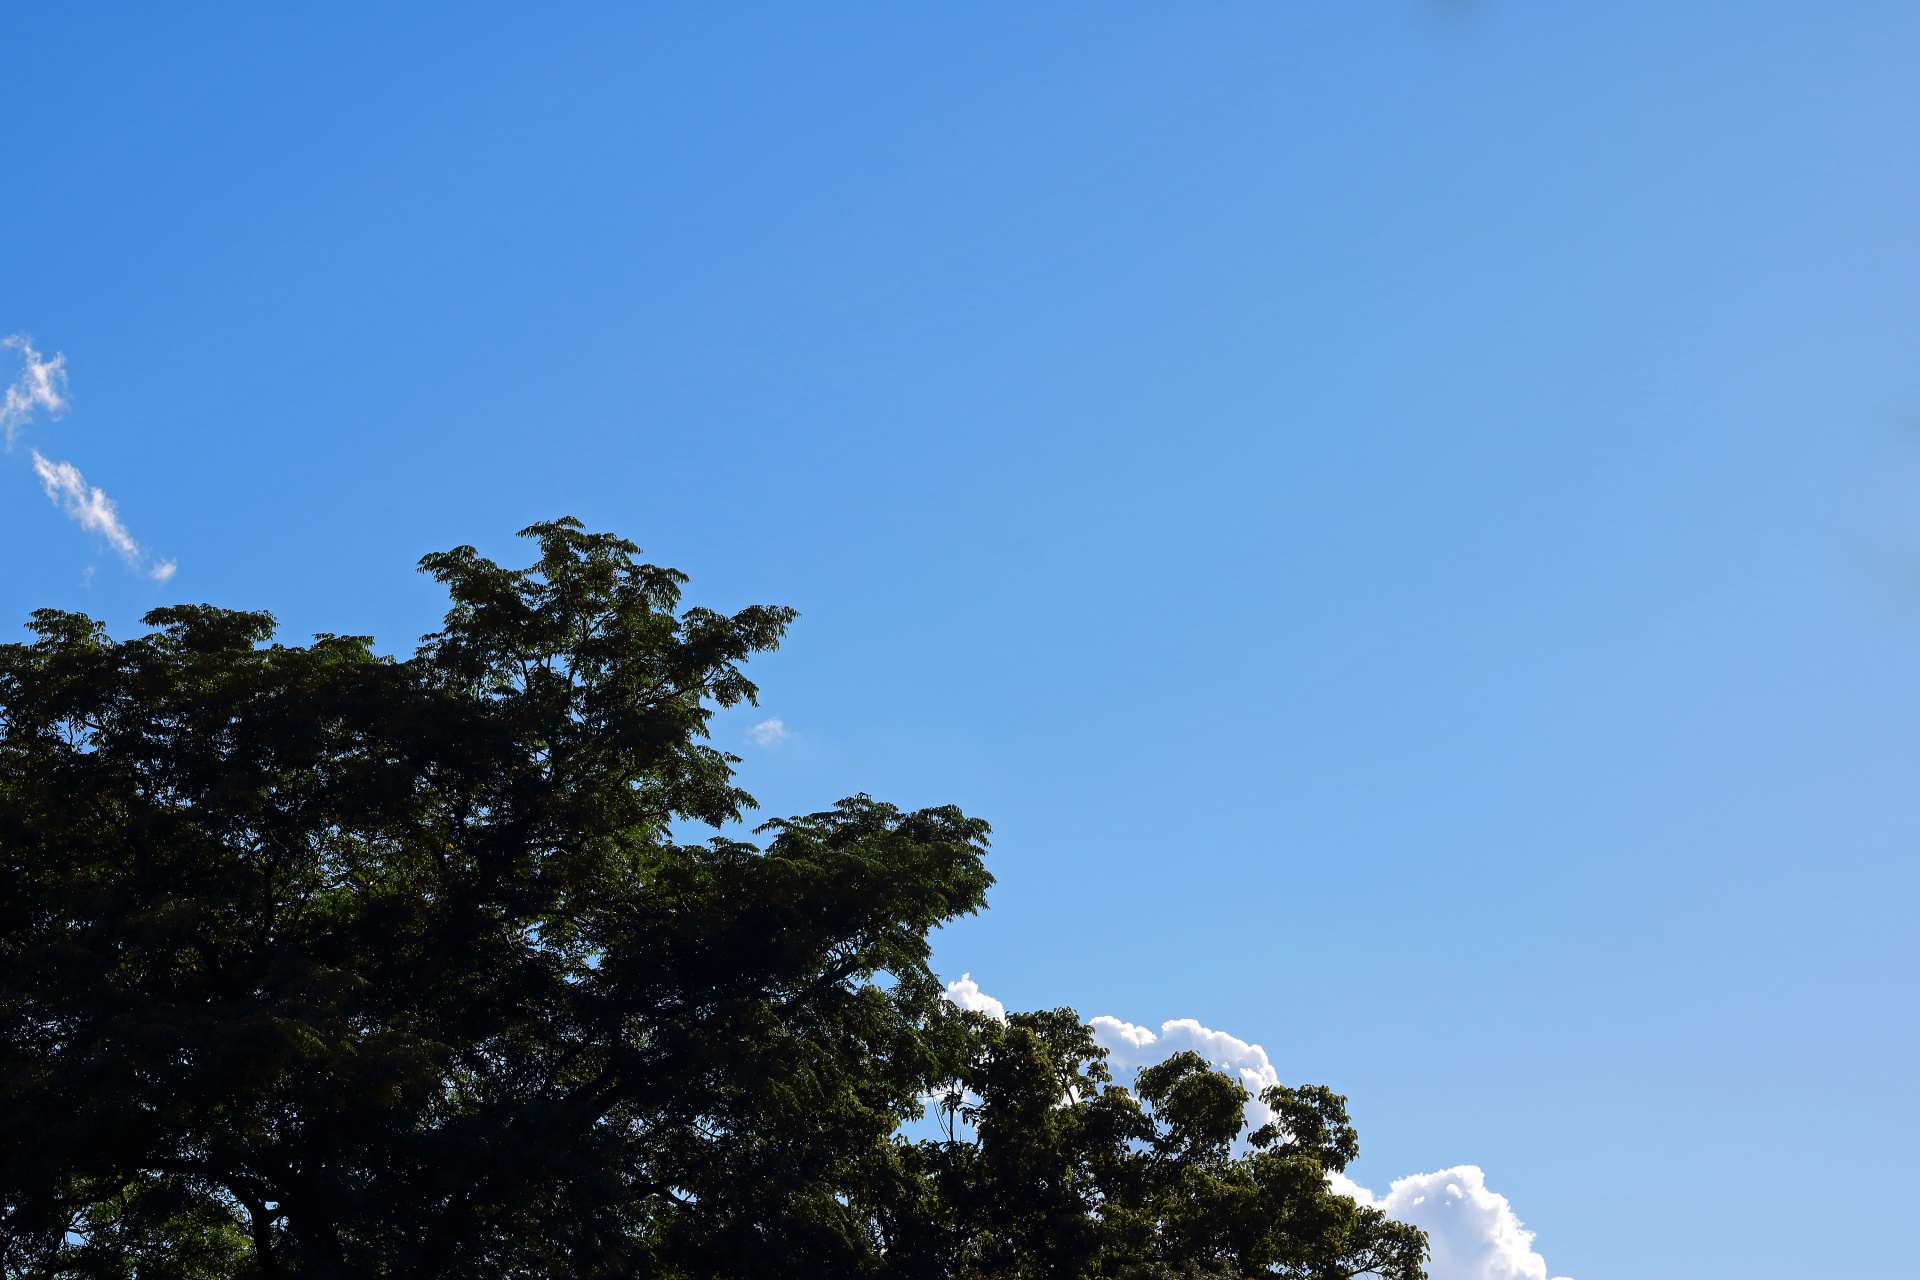 Cape Ash Tree Branches In Blue Sky